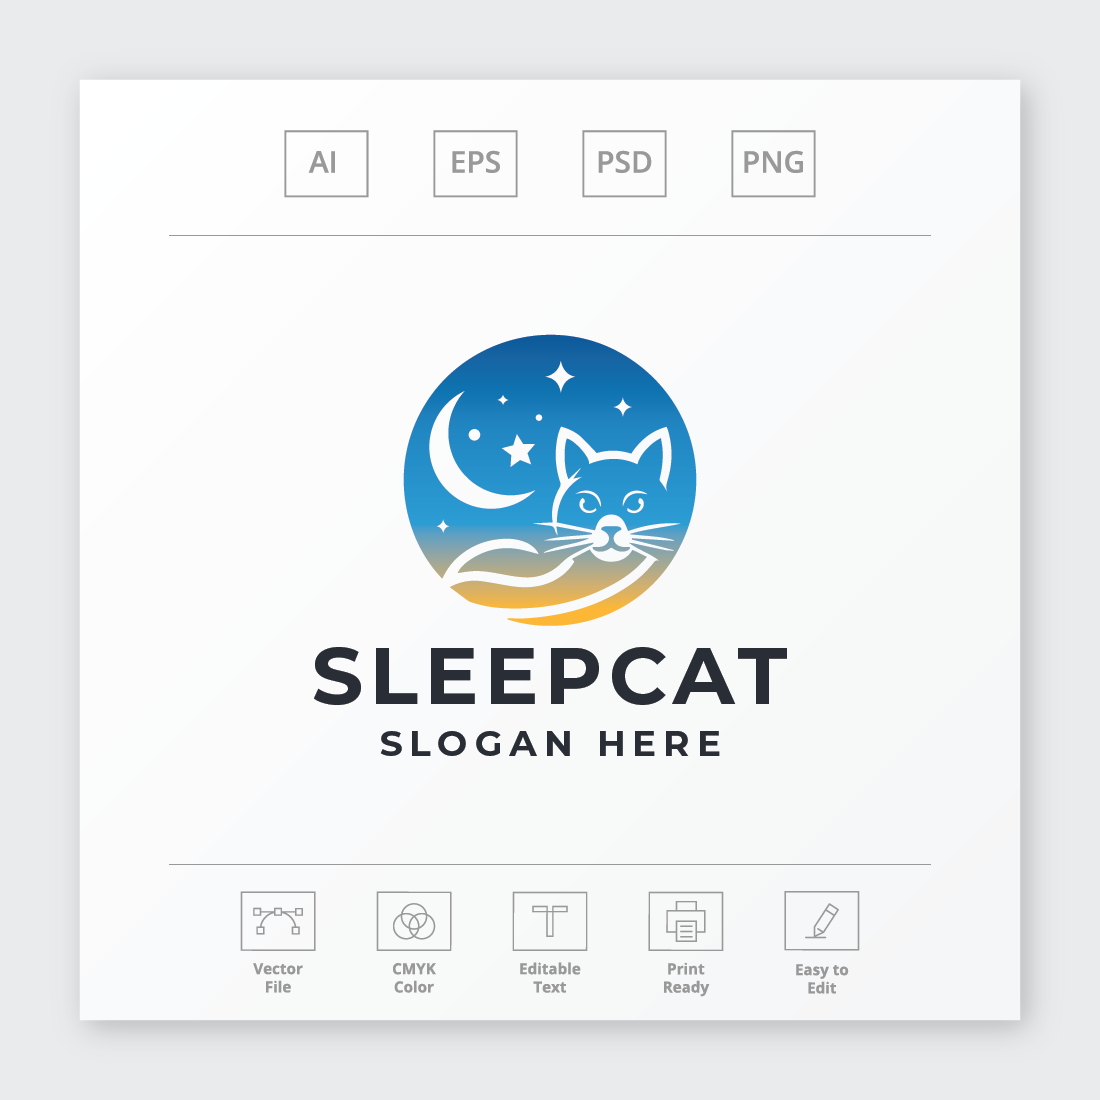 Sleep Cat Pet Logo cover image.